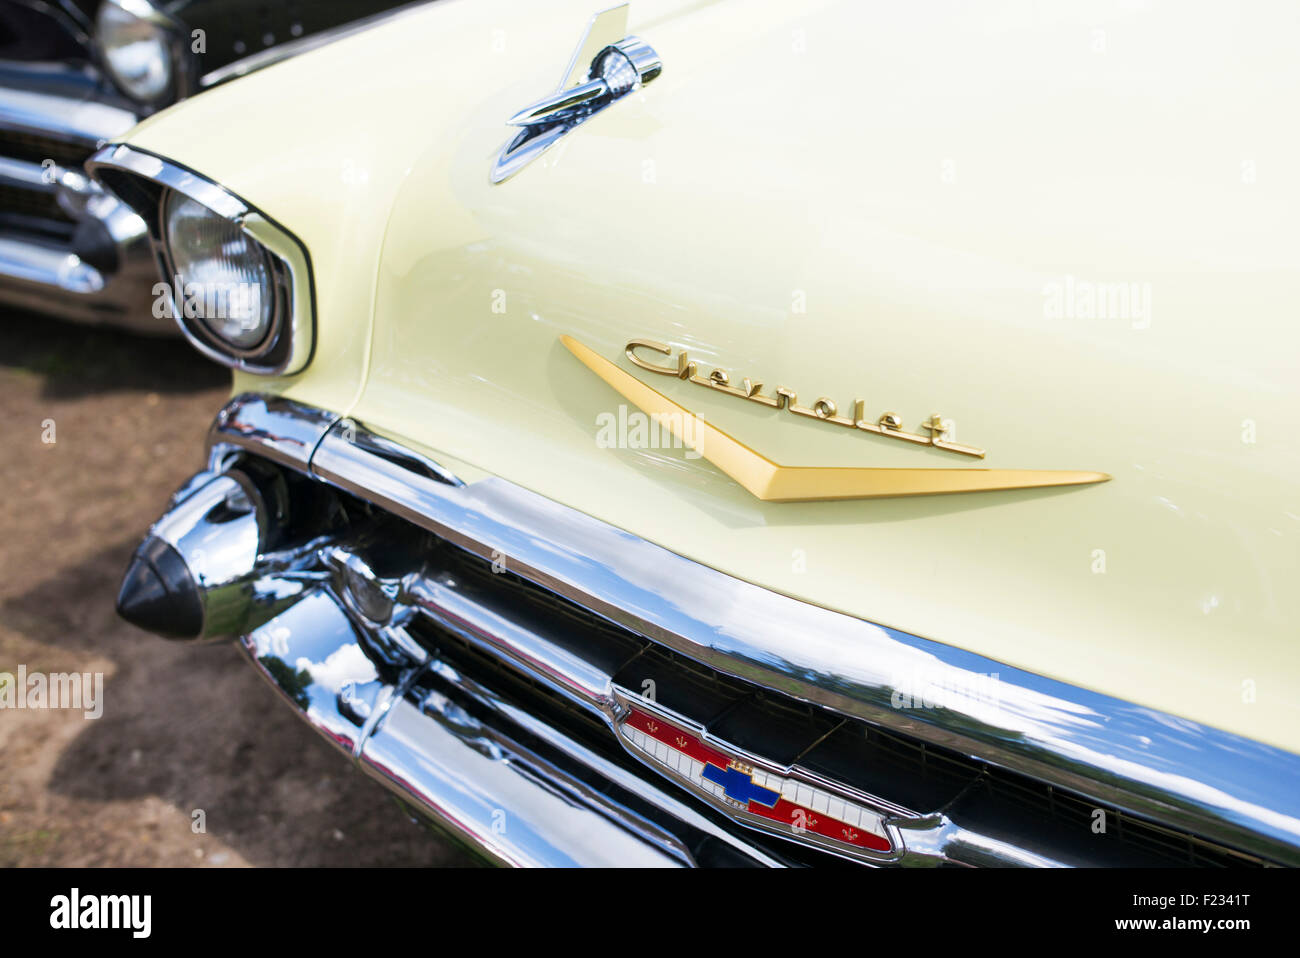 1957 Chevrolet, Bel Air. Chevy. Classic American car Foto Stock